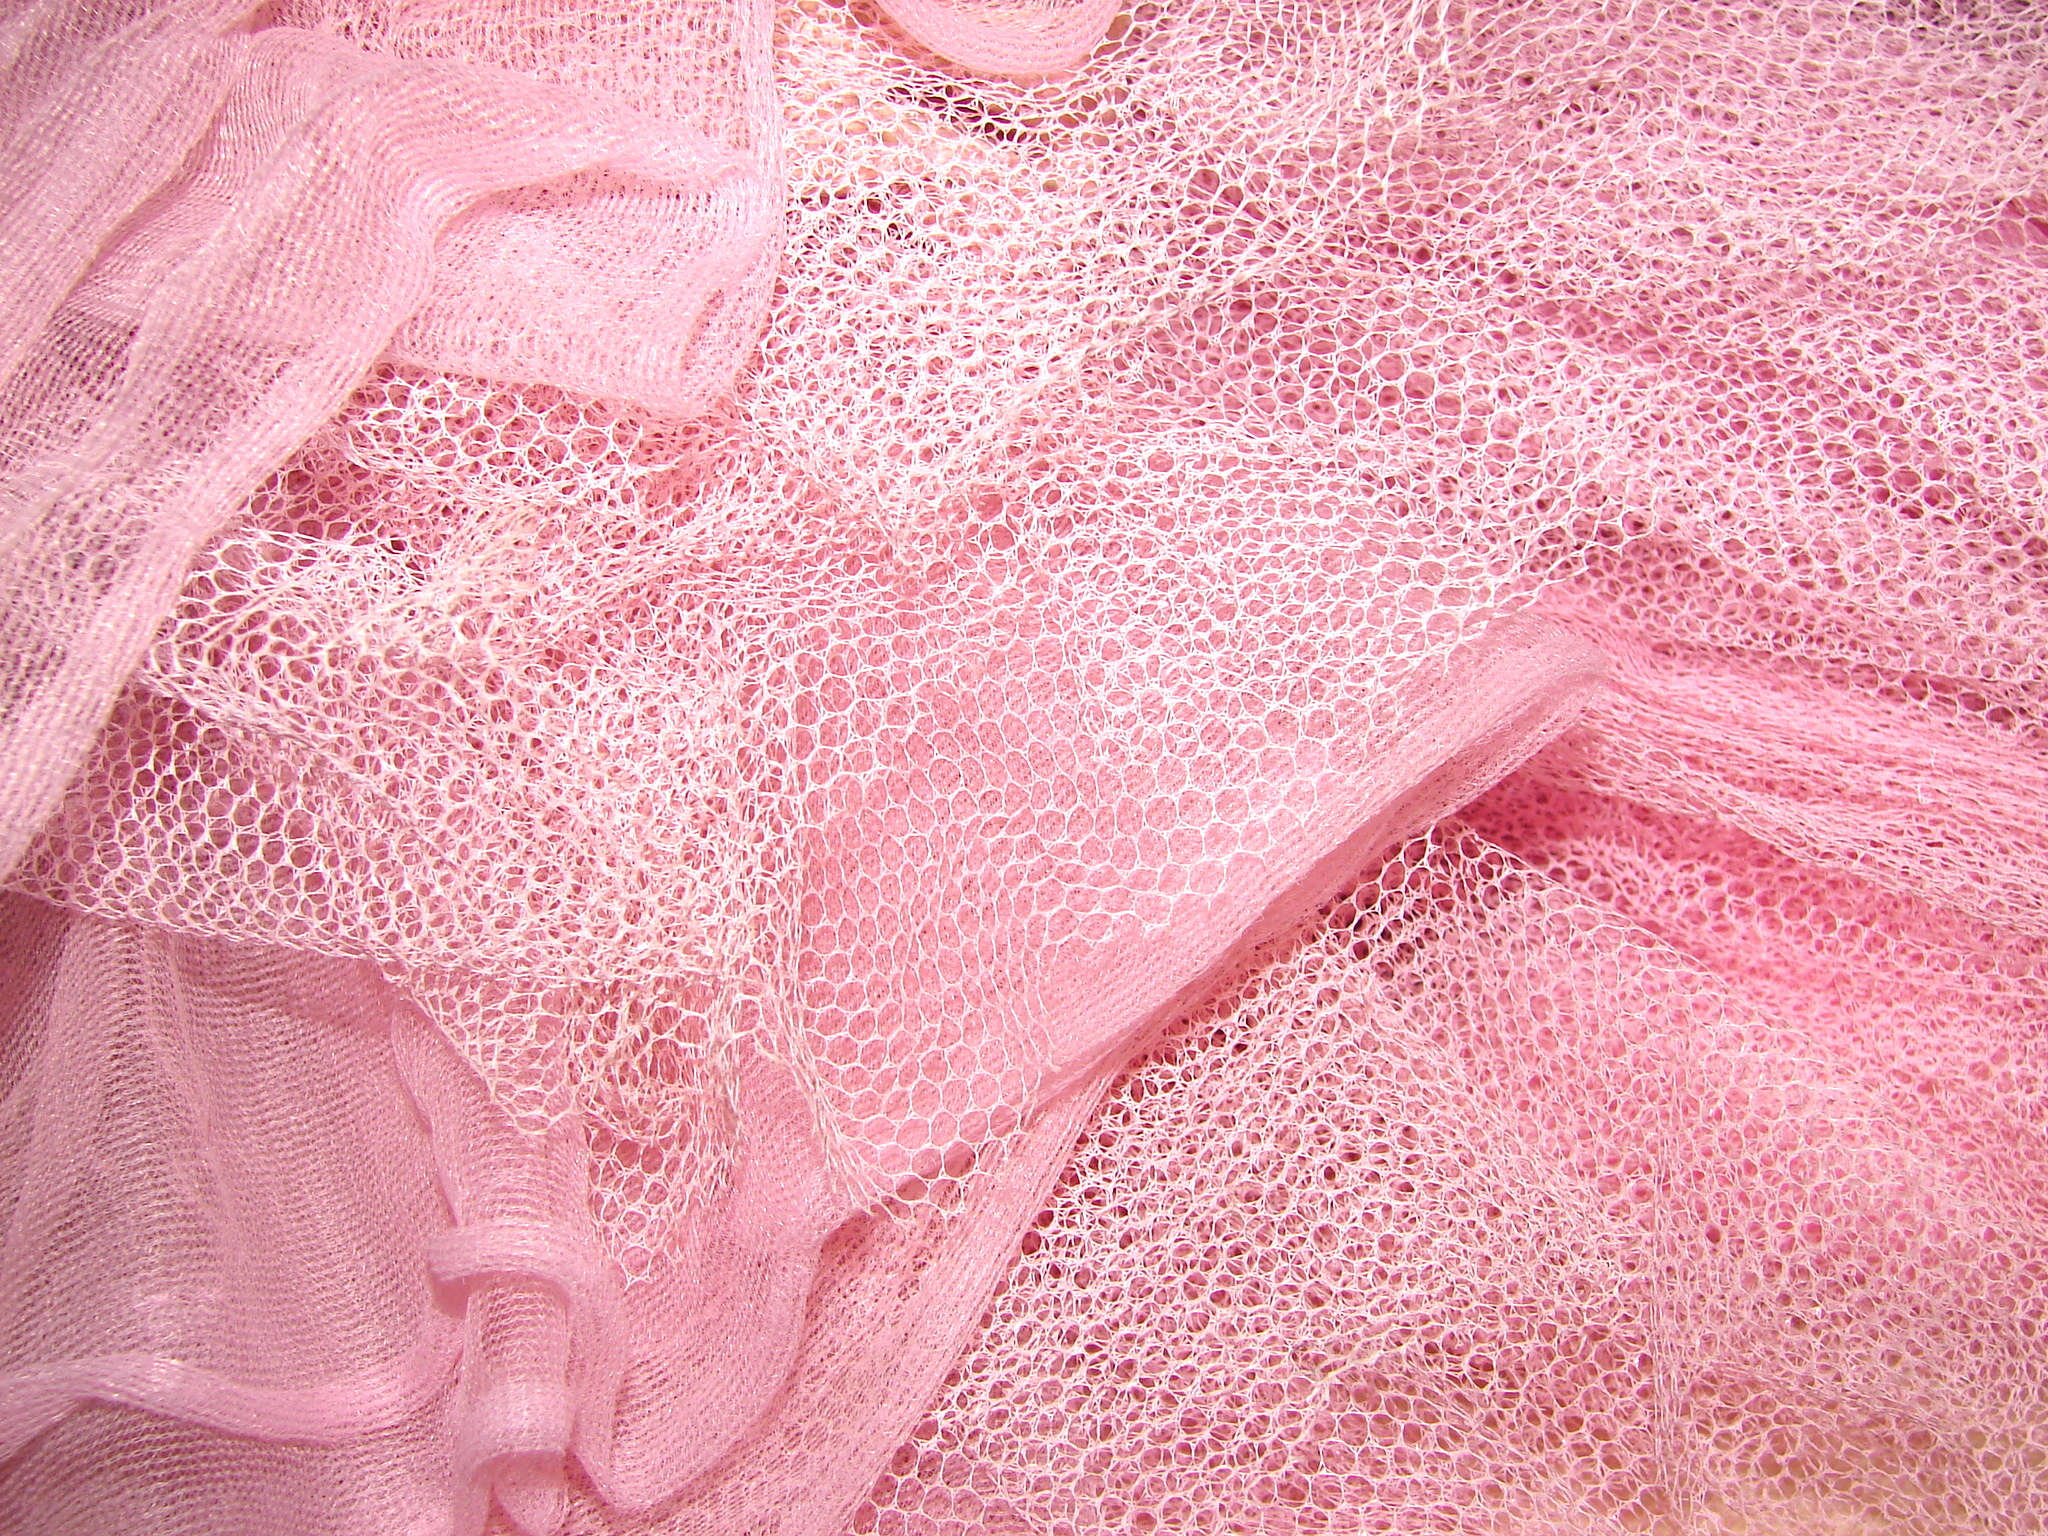 Pink Tutu Fabric Texture by FantasyStock on DeviantArt